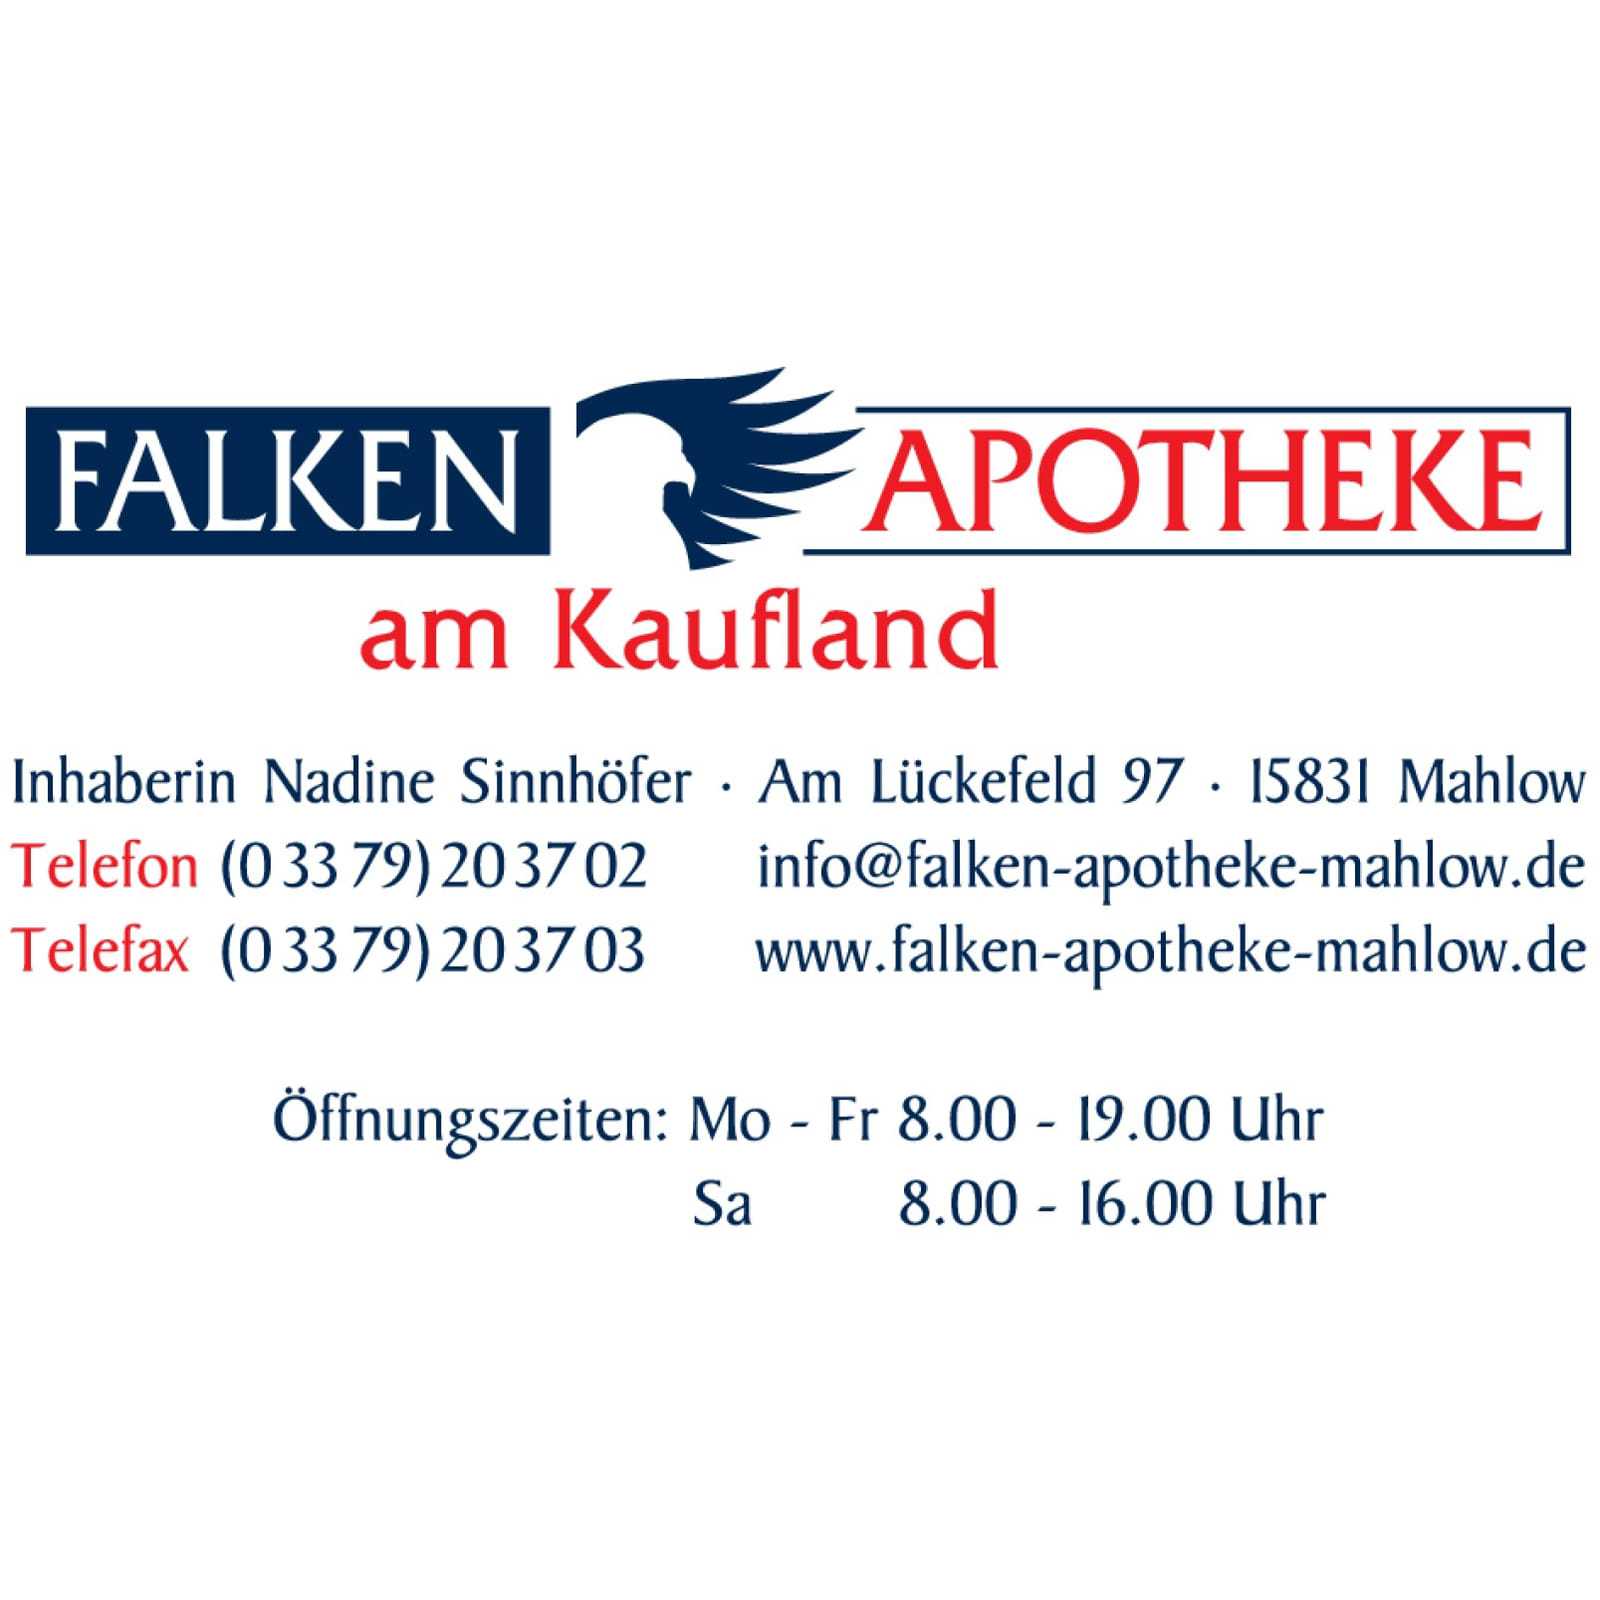 Falken Apotheke am Kaufland in Blankenfelde Mahlow - Logo